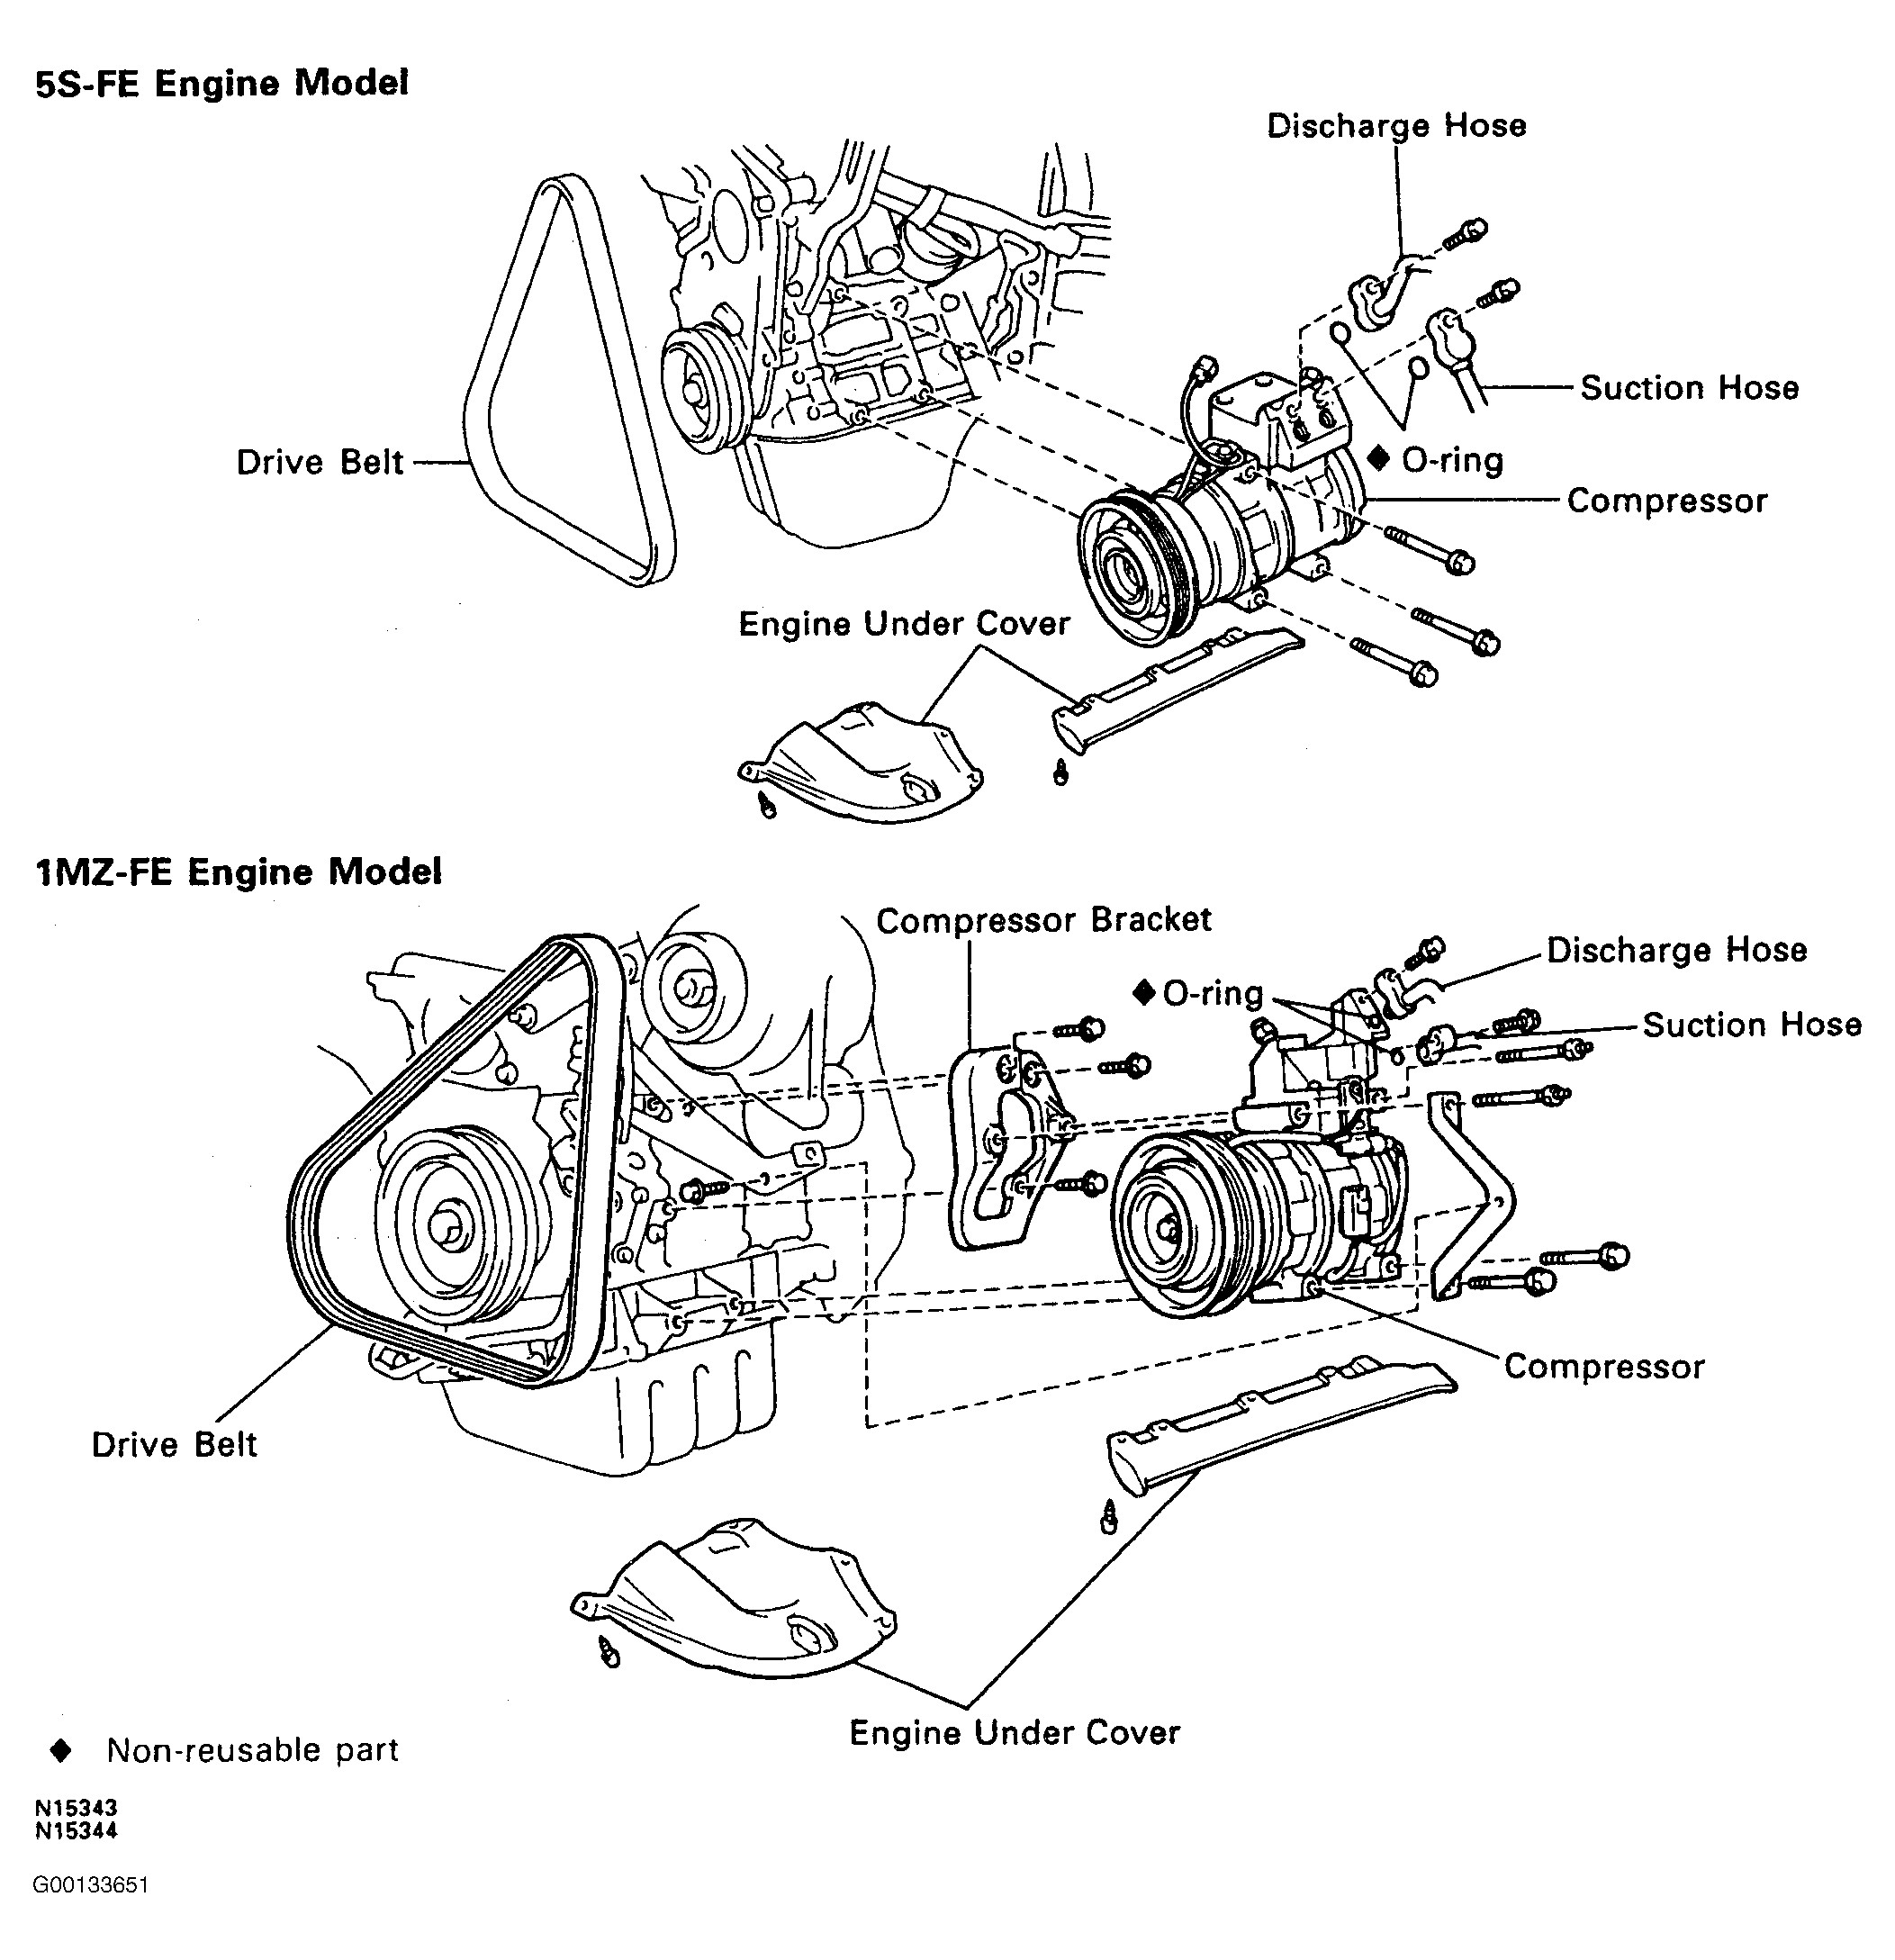 1996 toyota Camry Engine Diagram 95 toyota Camry Engine Diagram toyota Wiring Diagrams Instructions